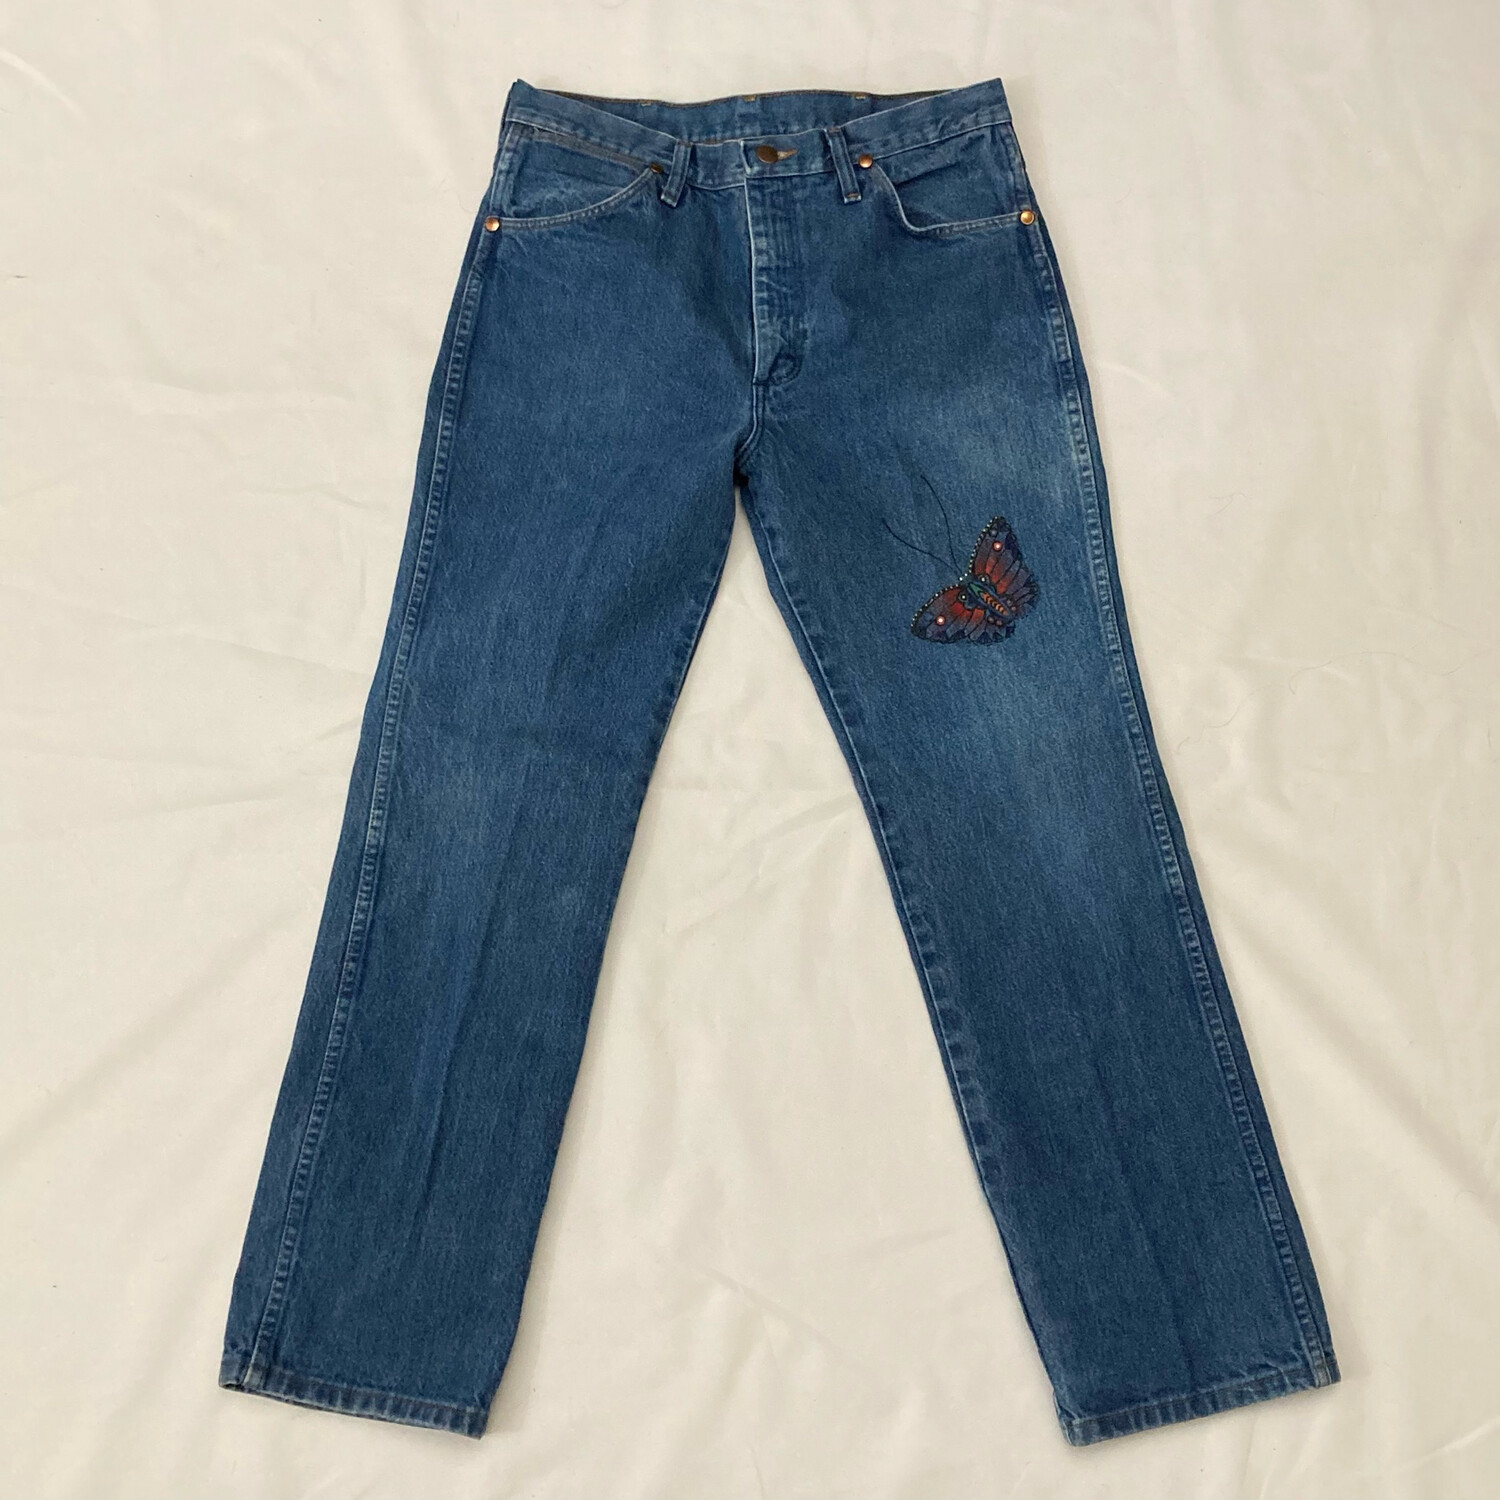 Vintage Butterfly Jeans